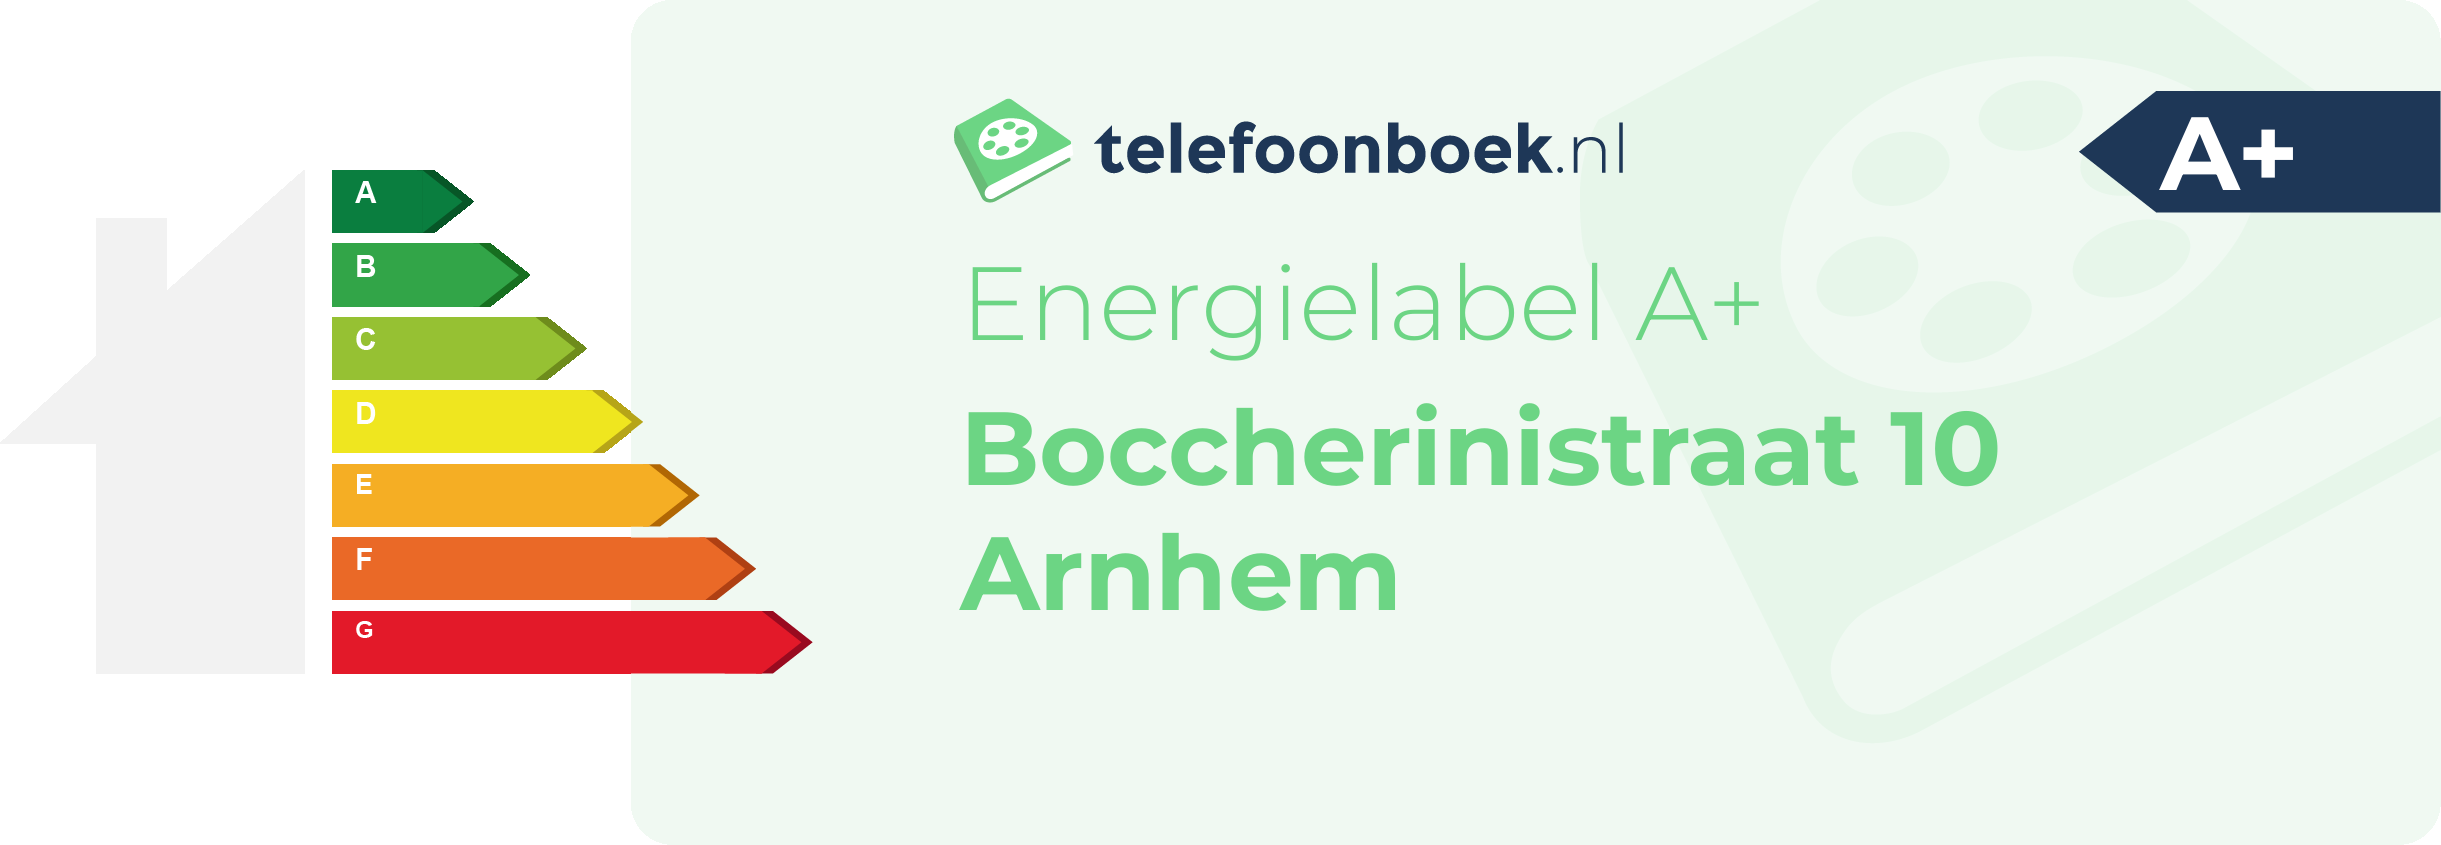 Energielabel Boccherinistraat 10 Arnhem